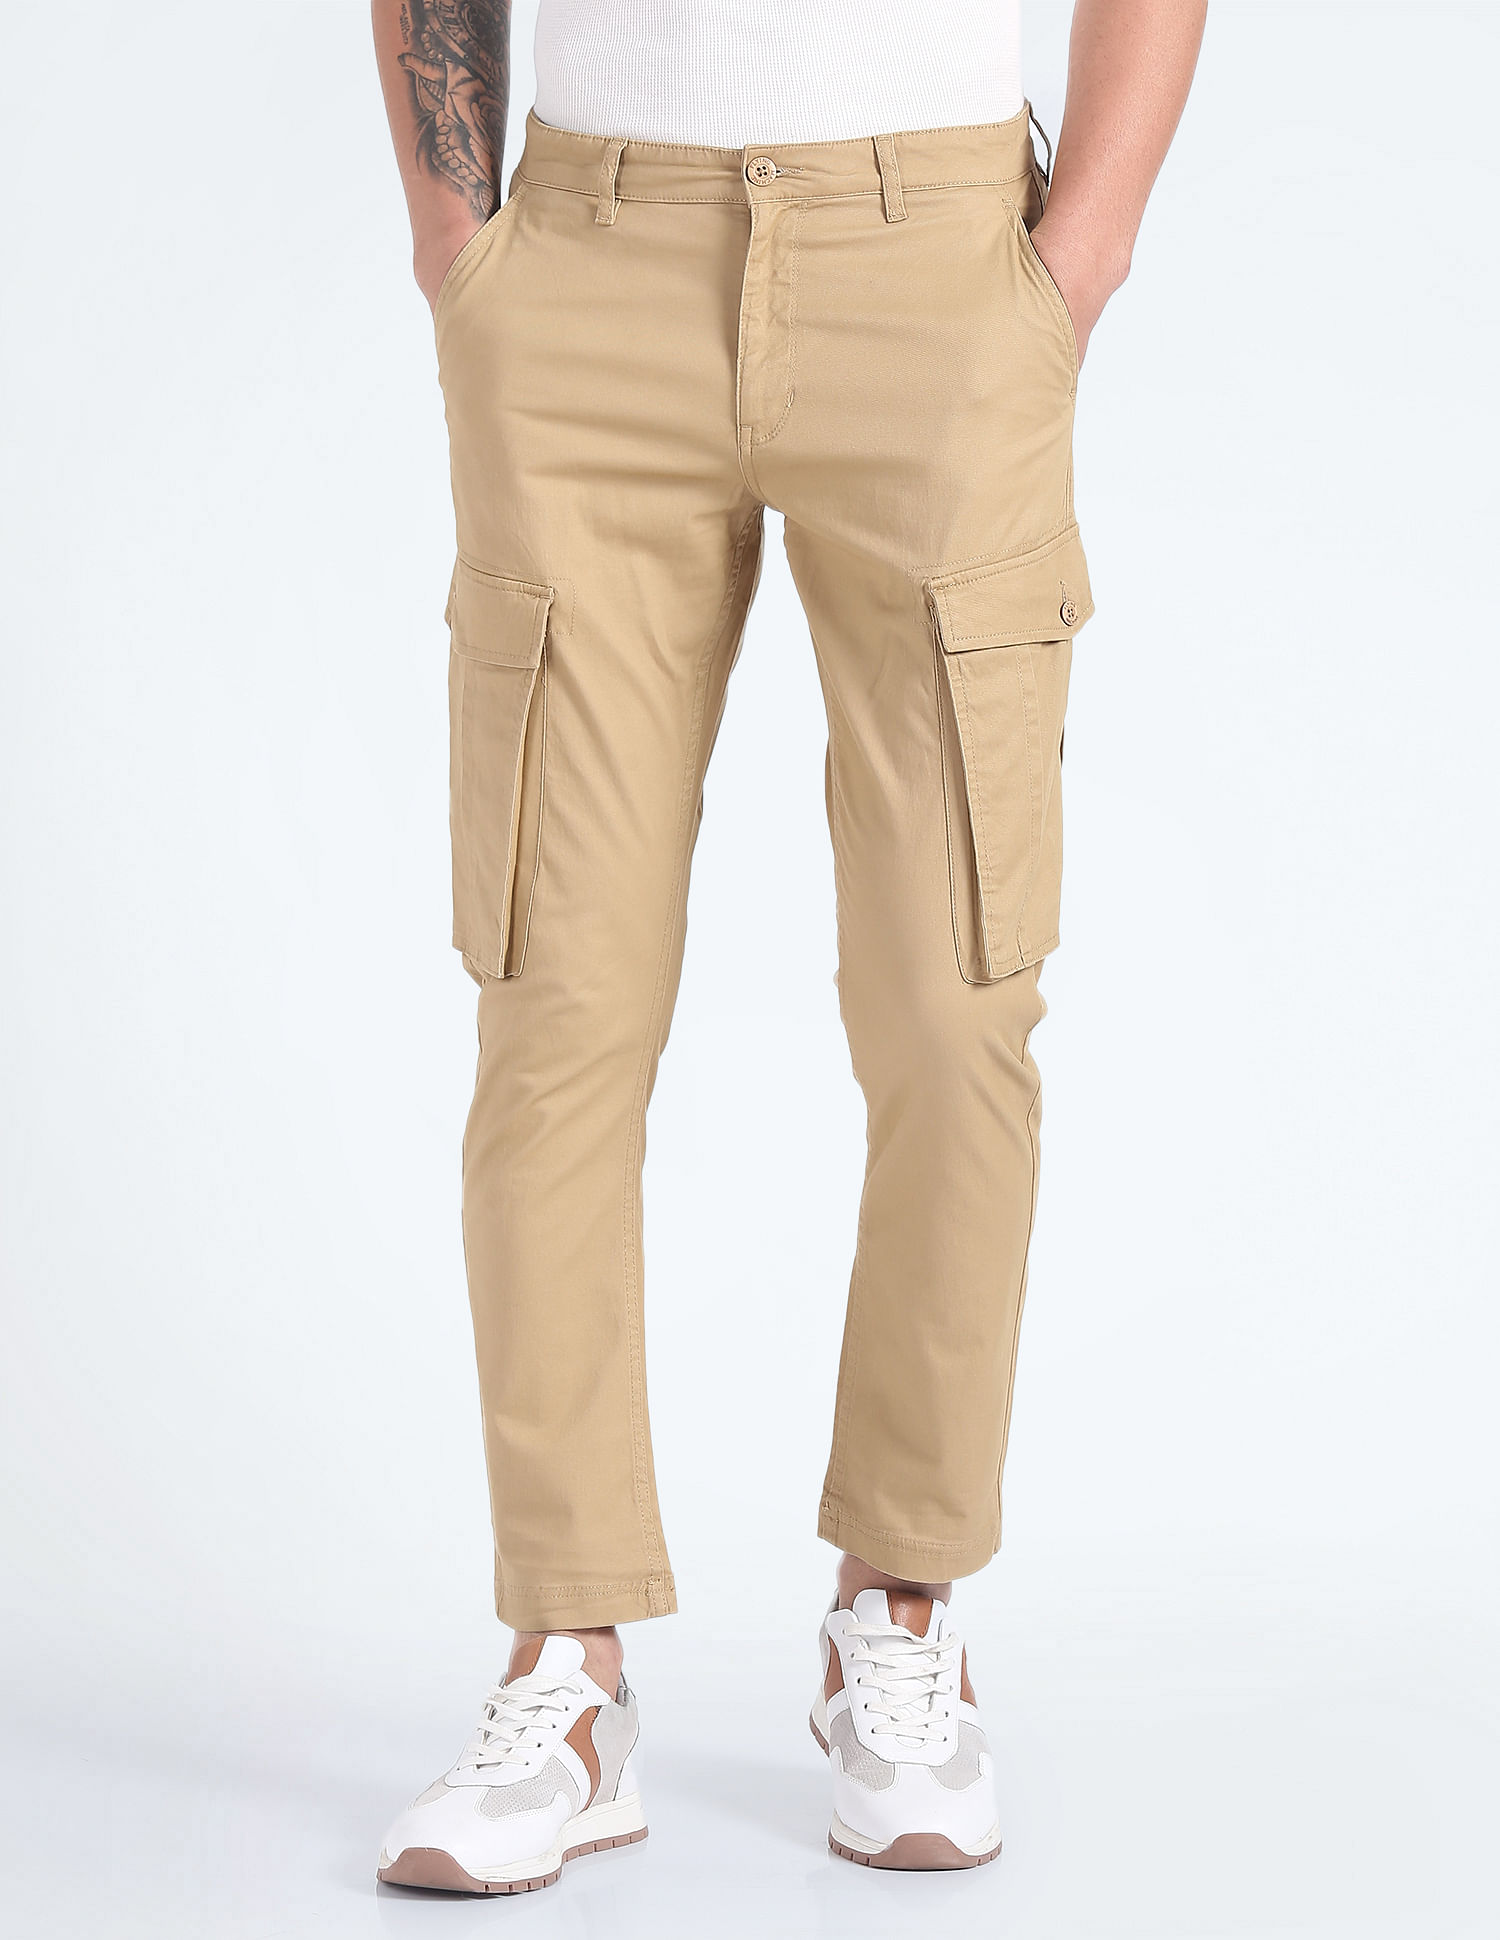 Bottega Veneta® Men's Nylon Cargo Trousers in Dark navy. Shop online now.